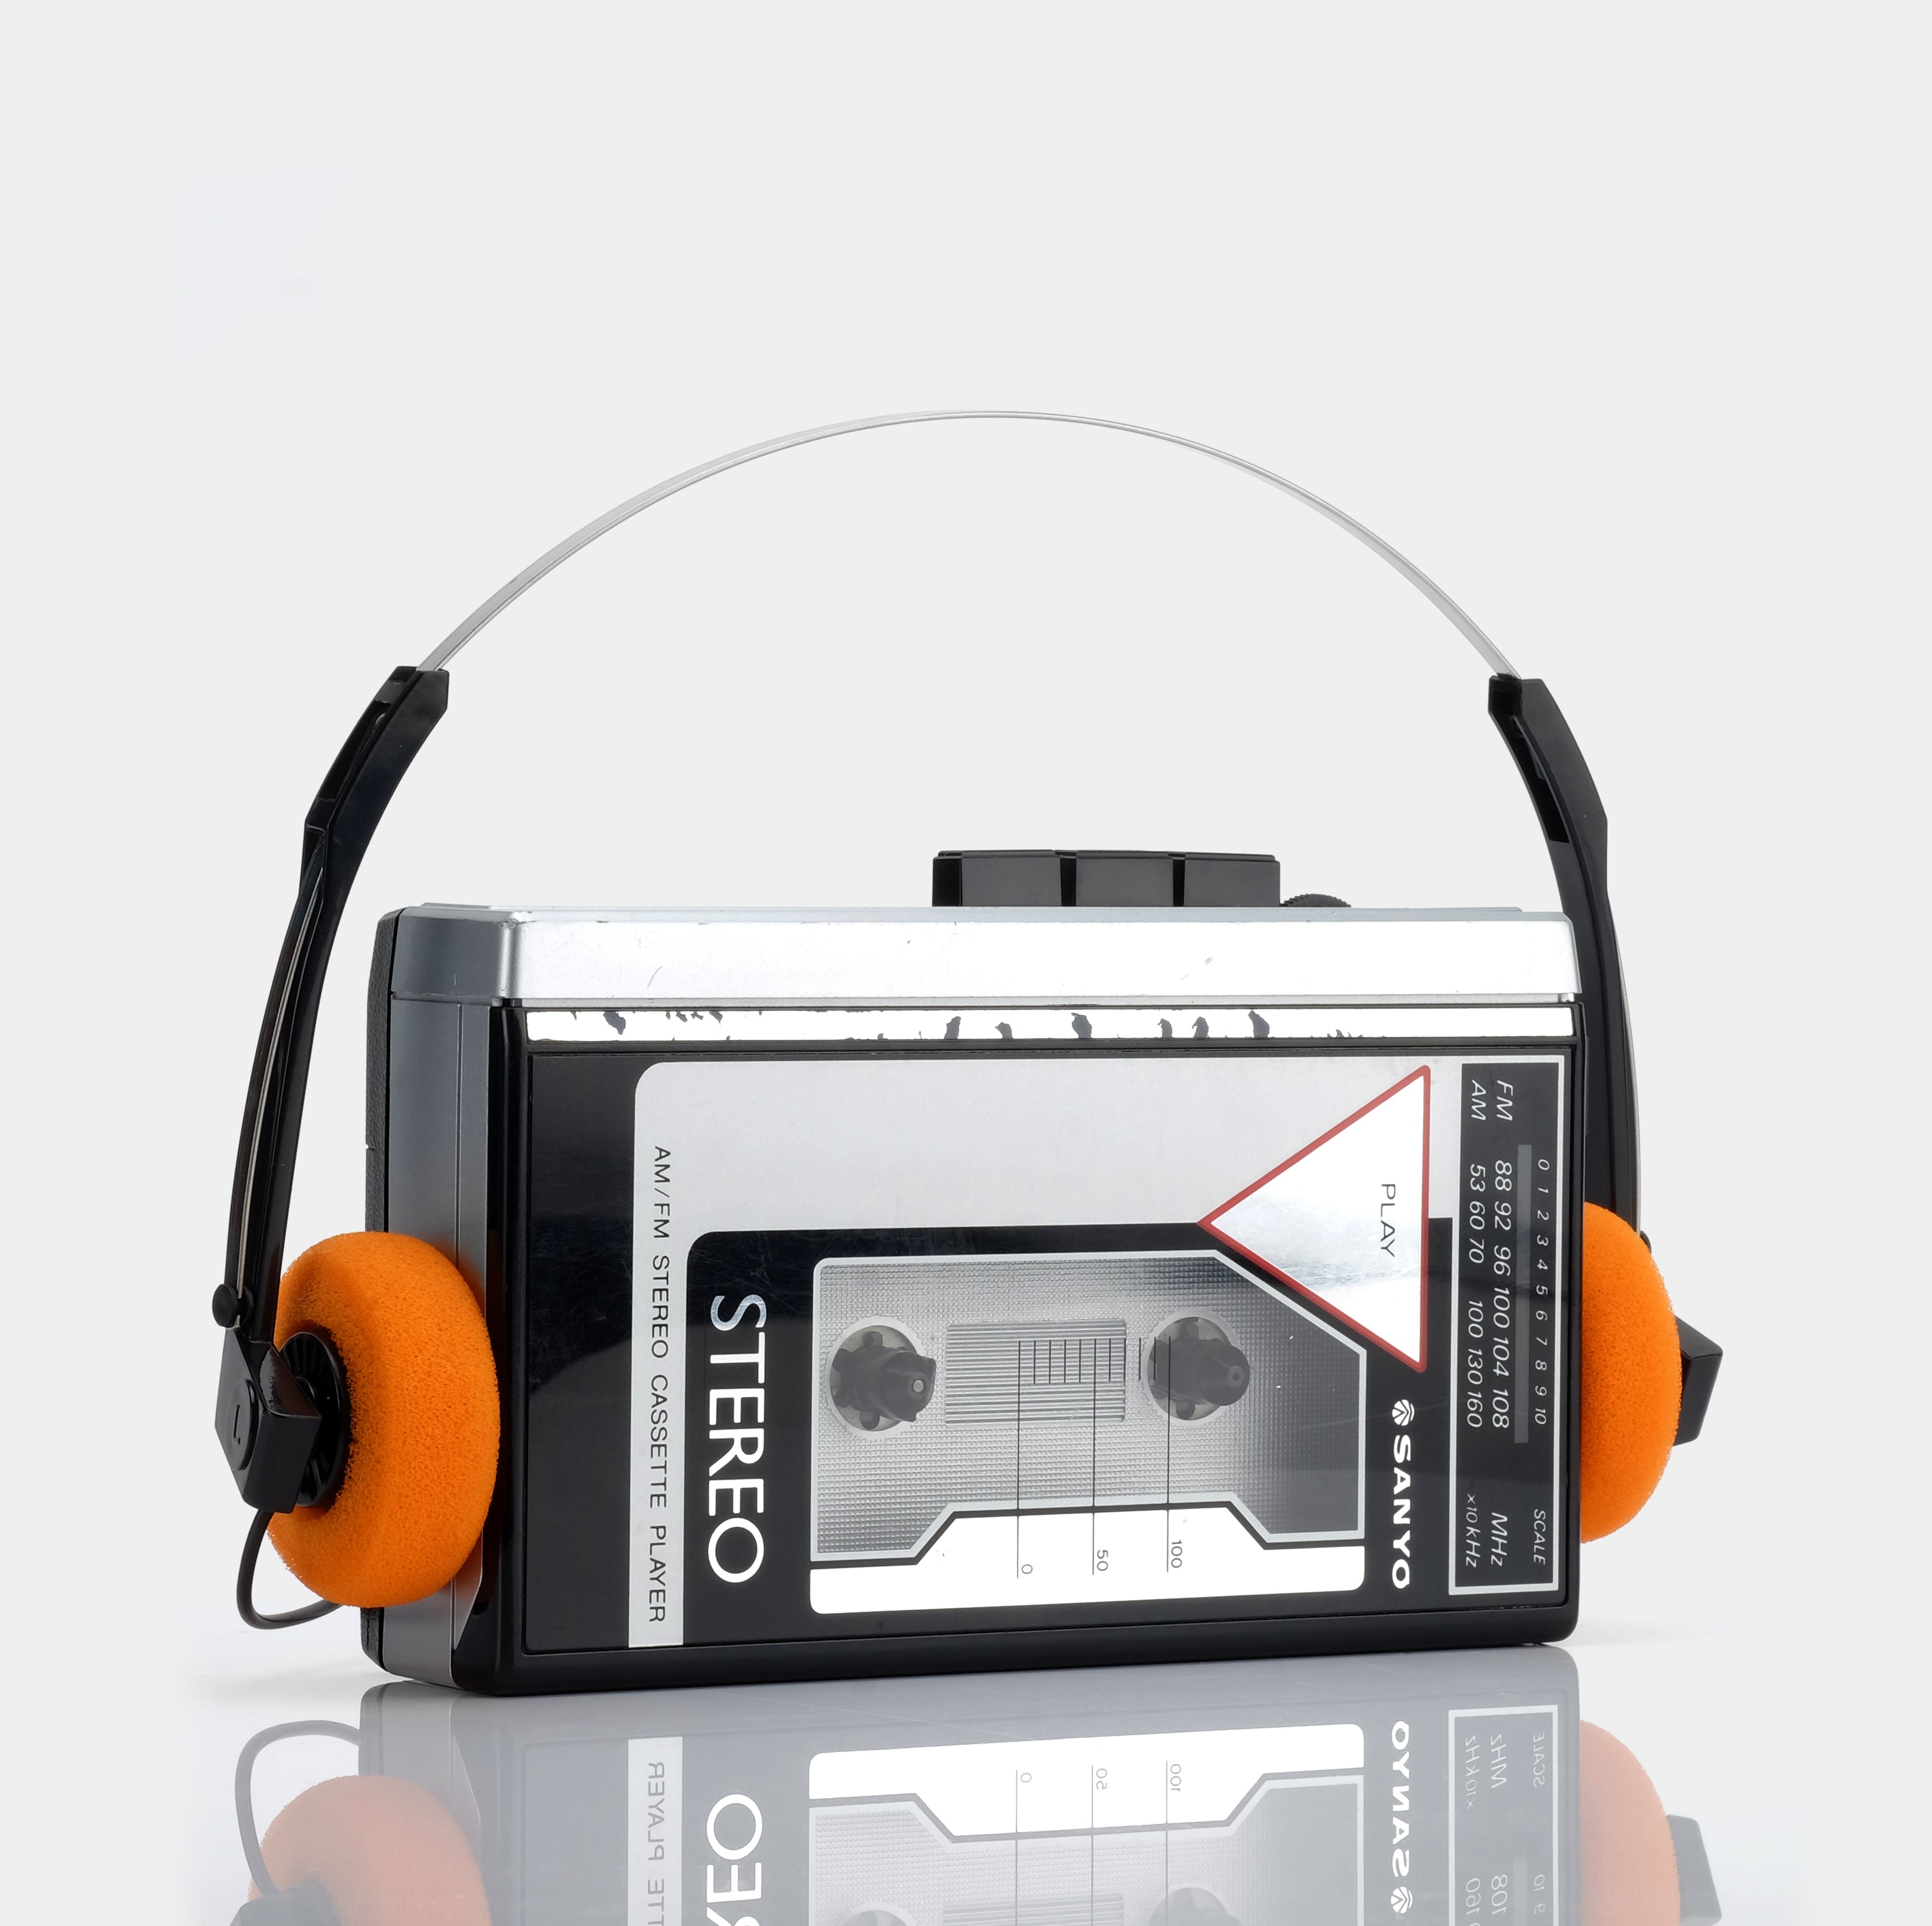 Sanyo MGR60 AM/FM Portable Cassette Player